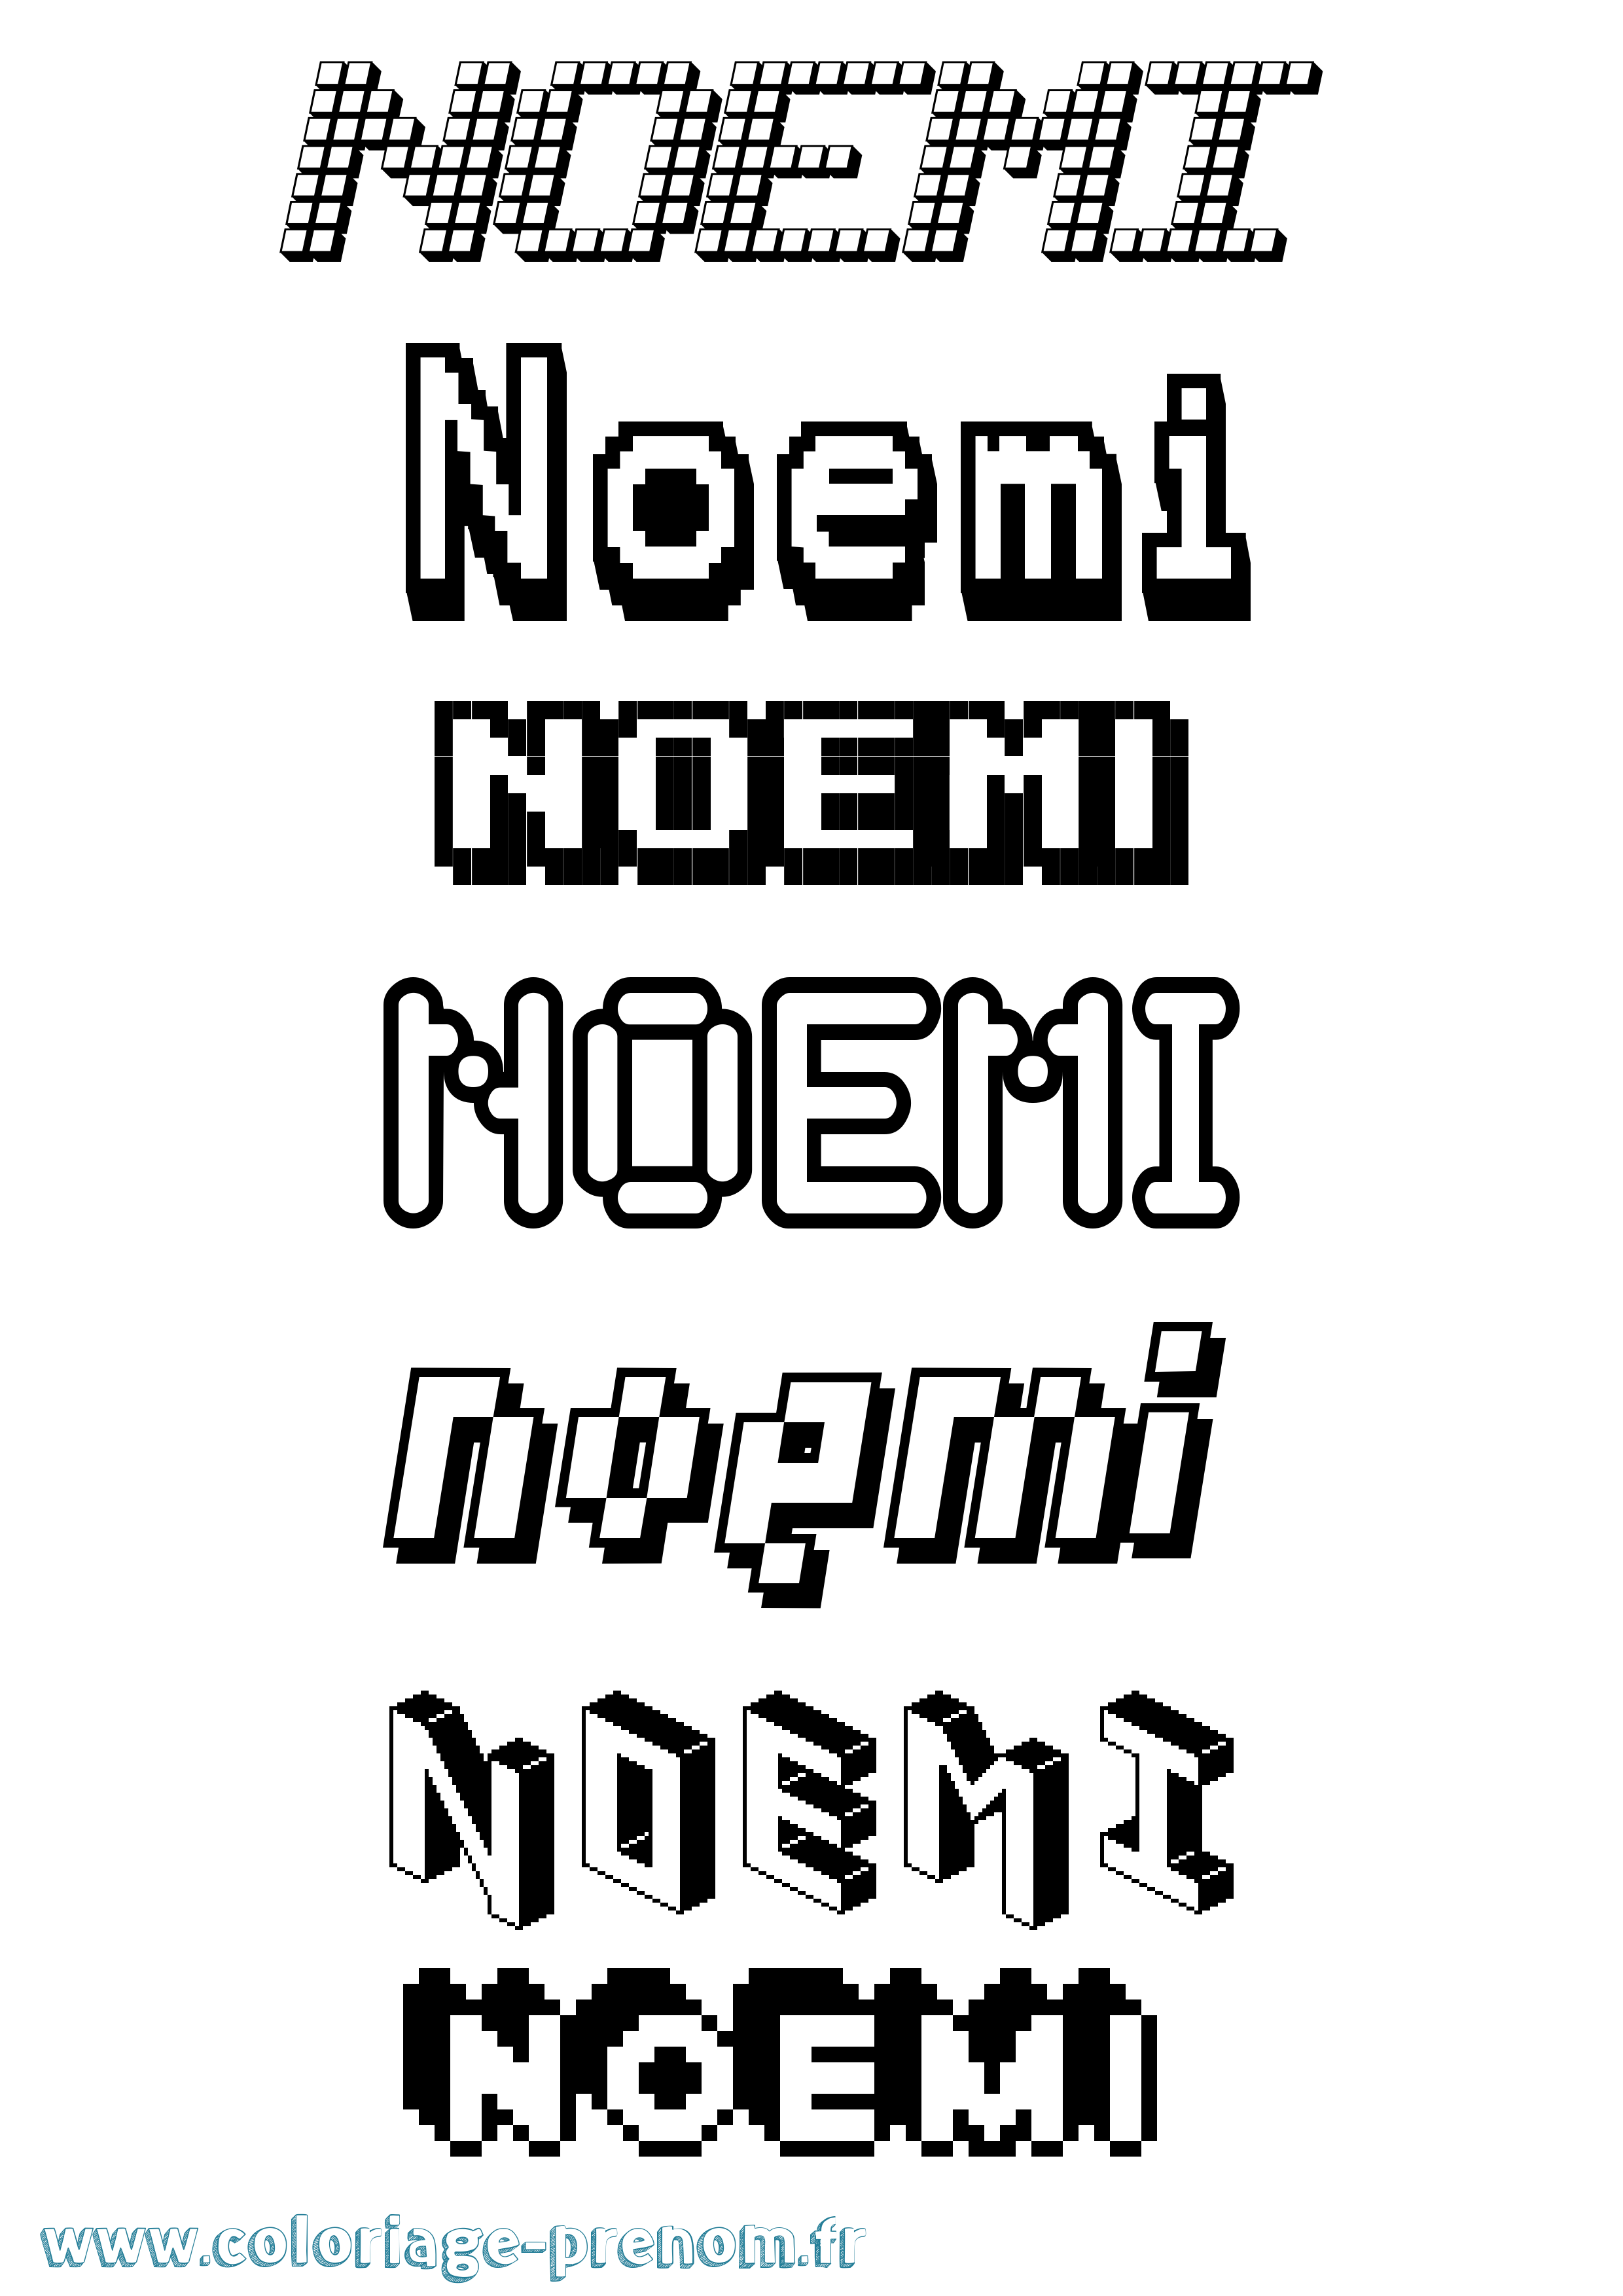 Coloriage prénom Noemi Pixel